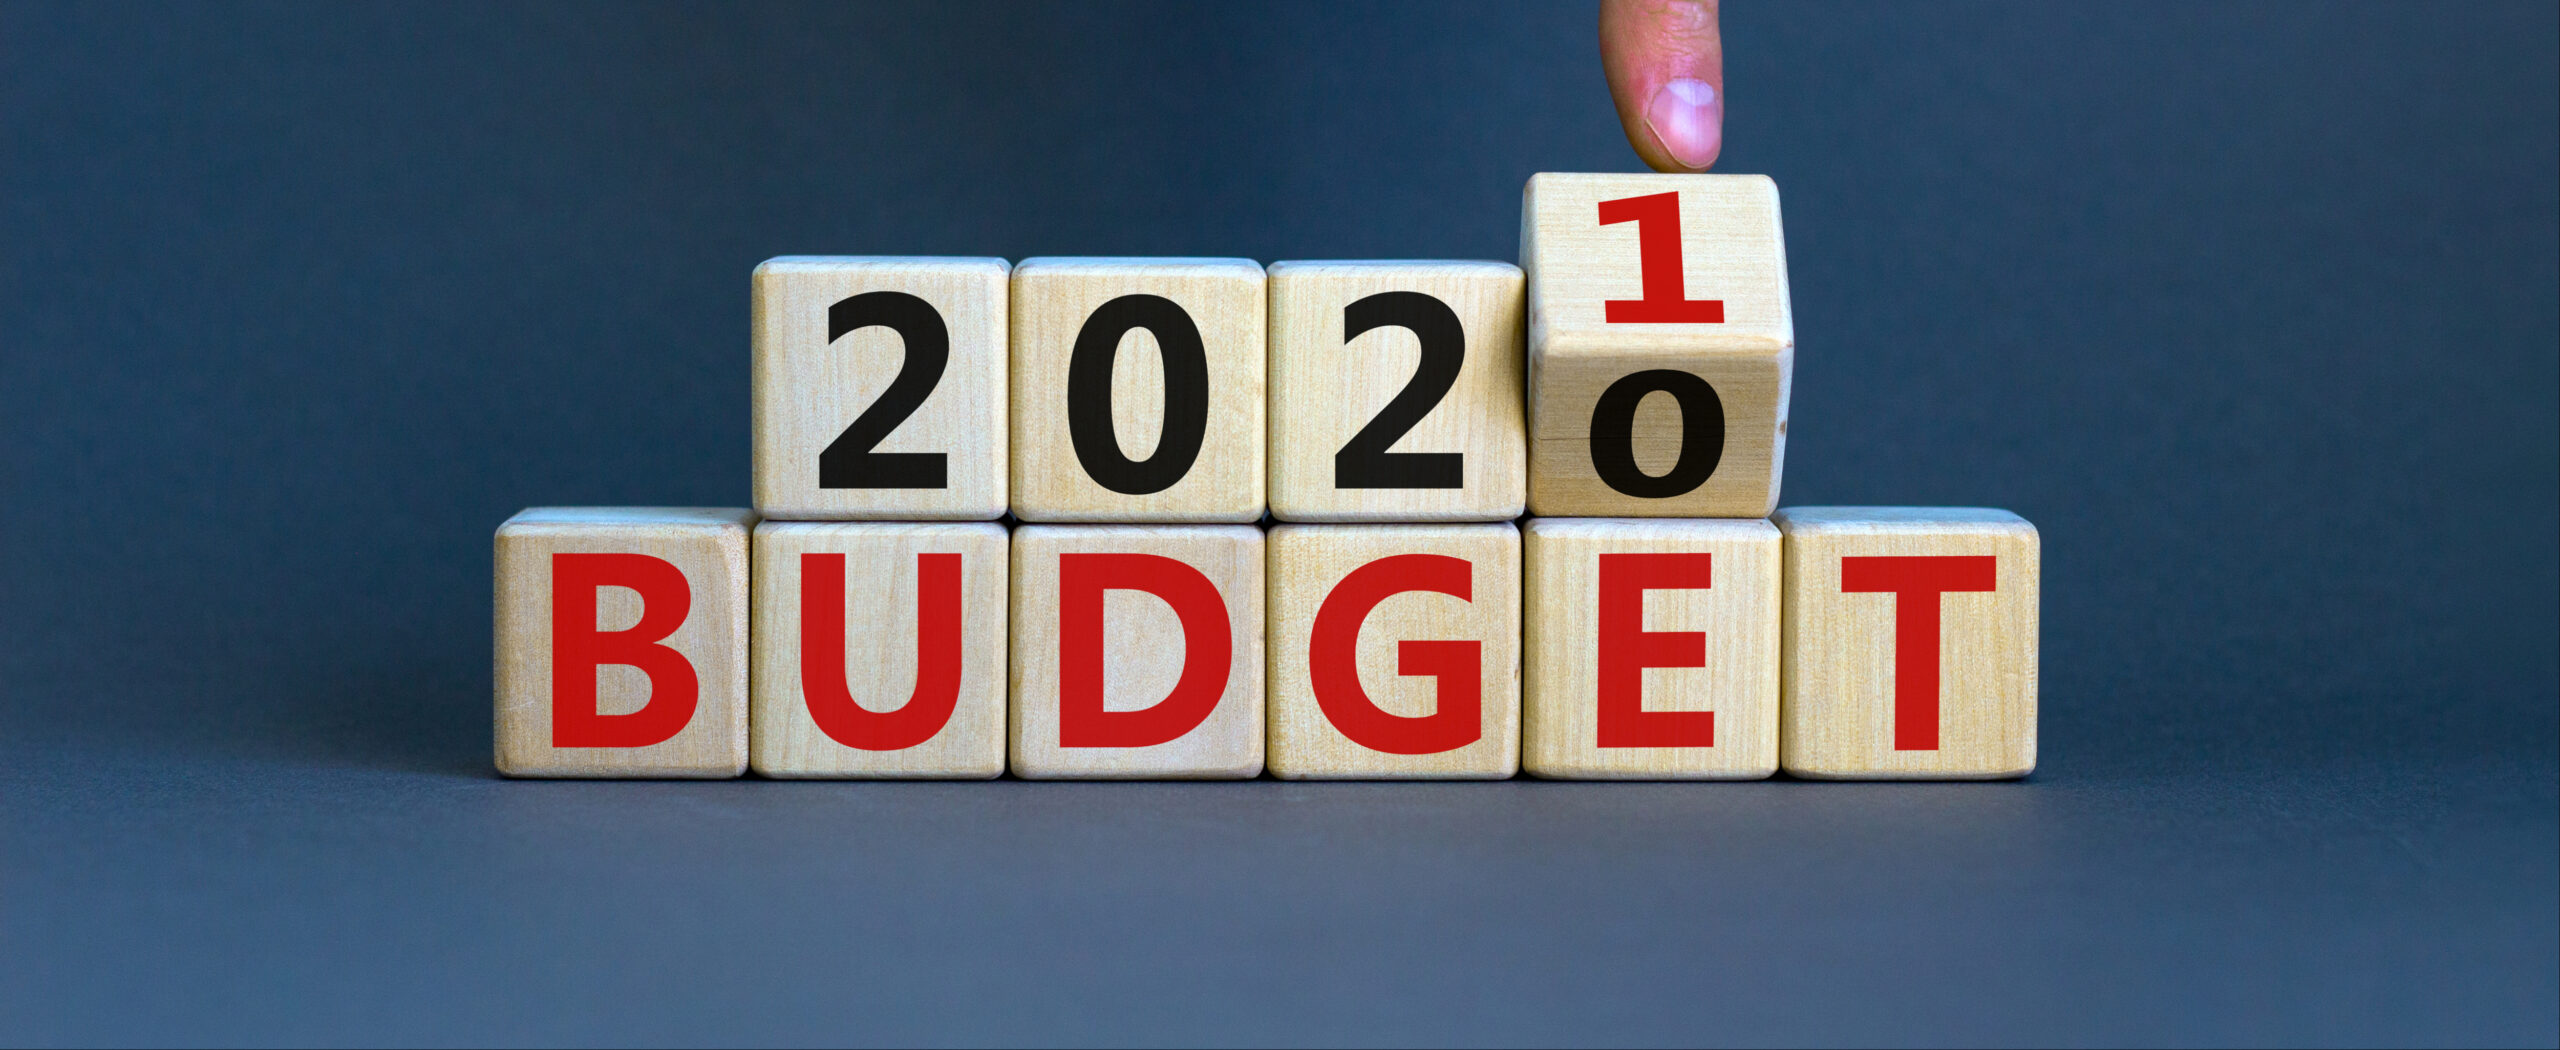 Budget 2020 analysis